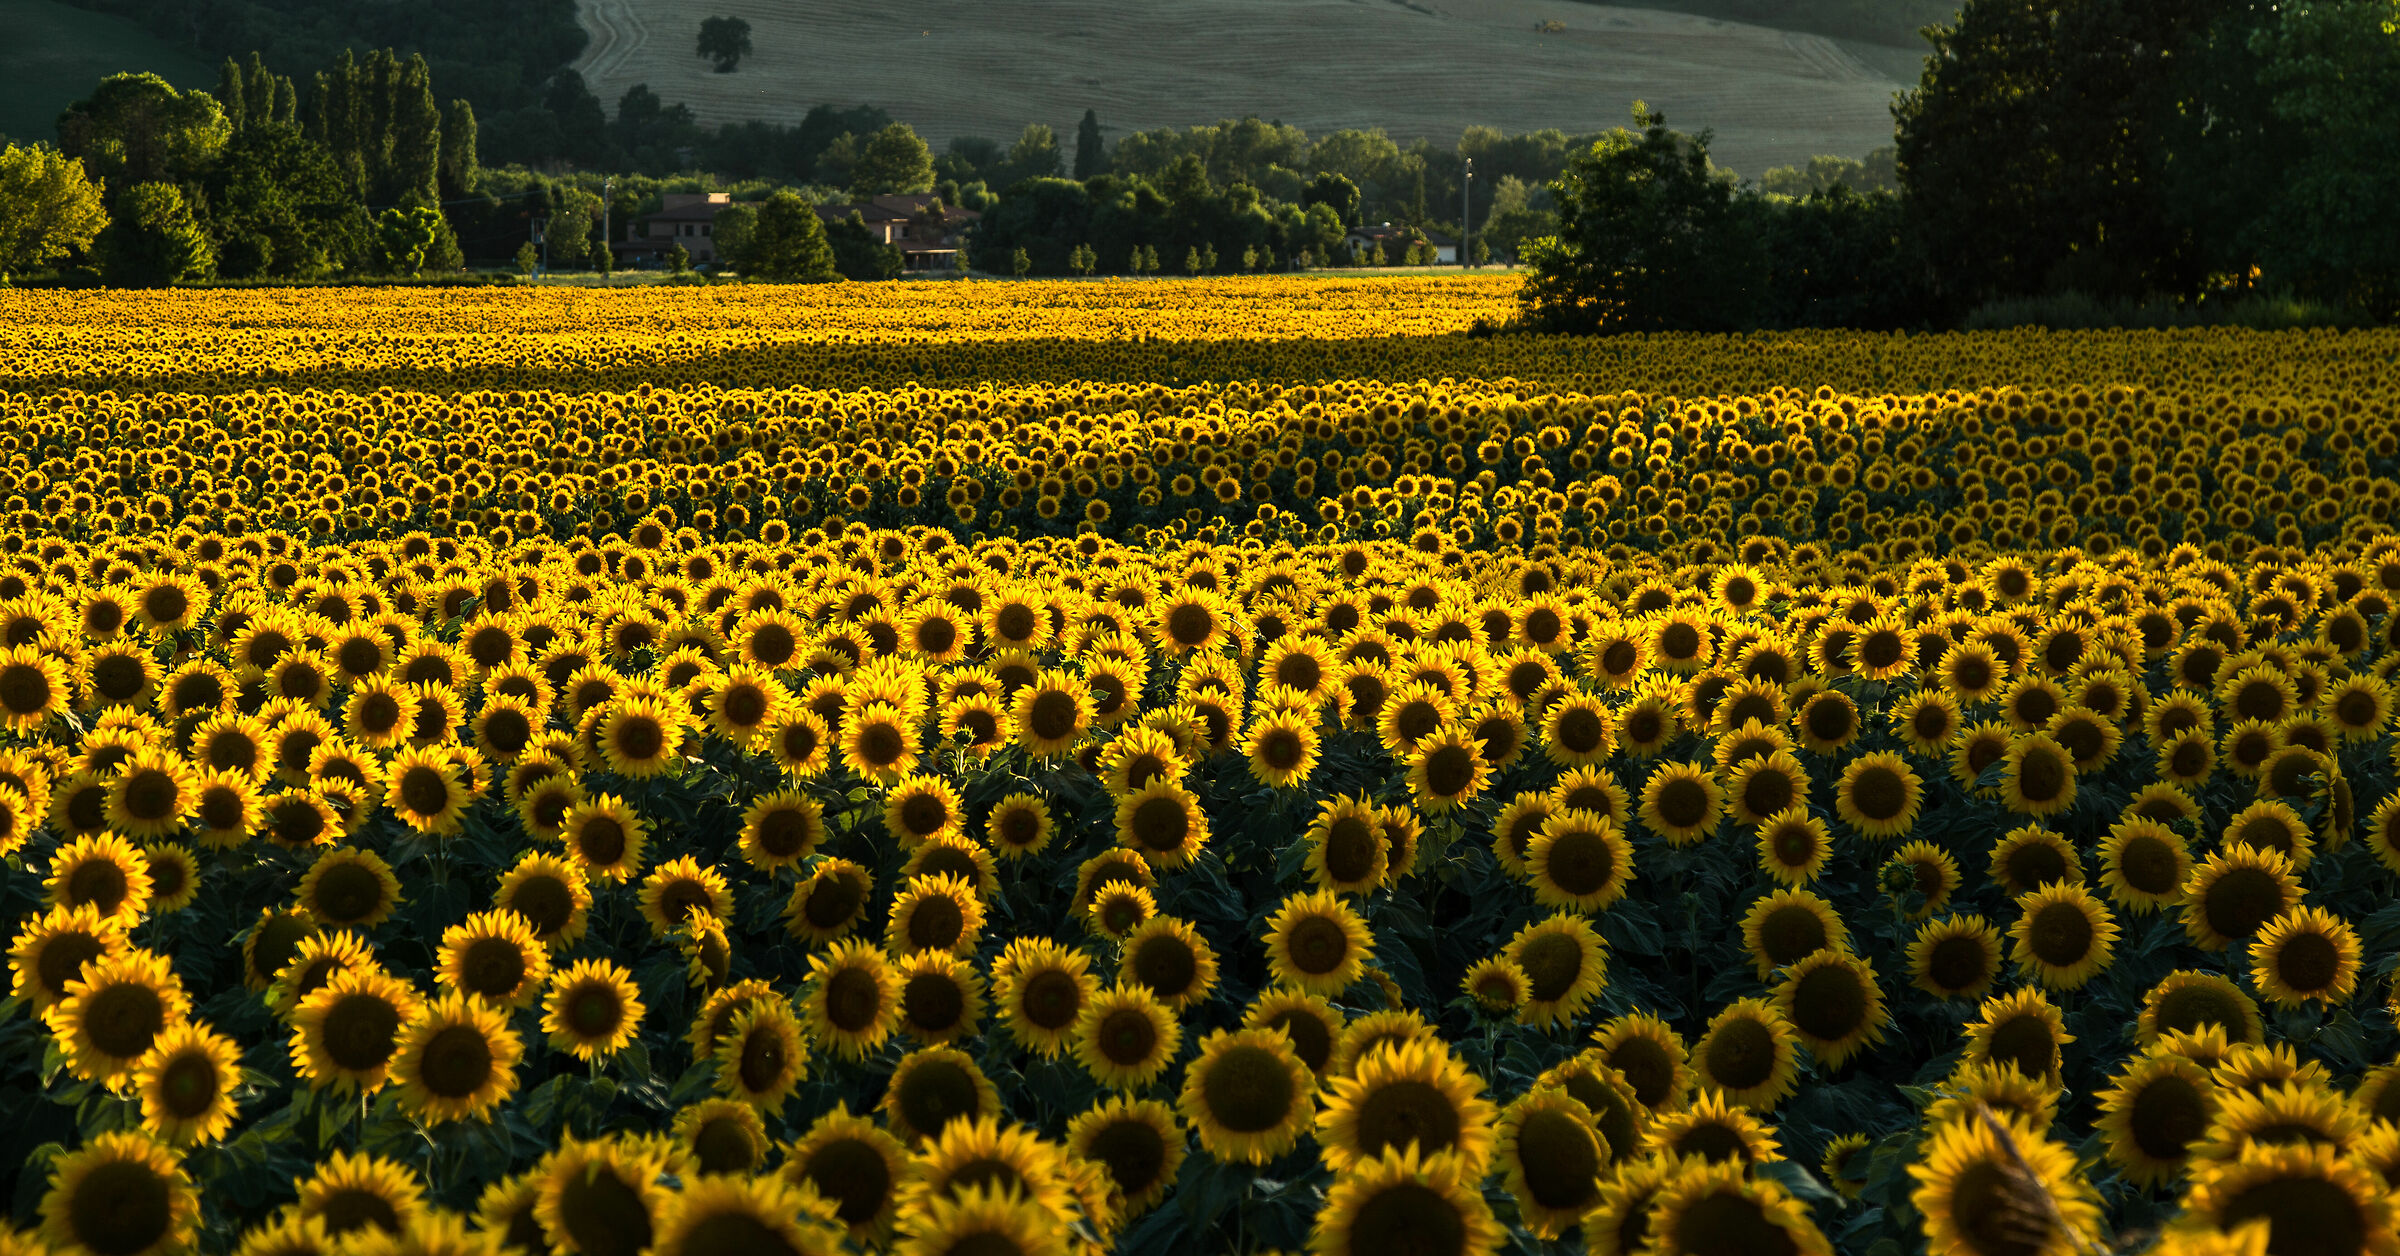 Sunflowers at sunset...